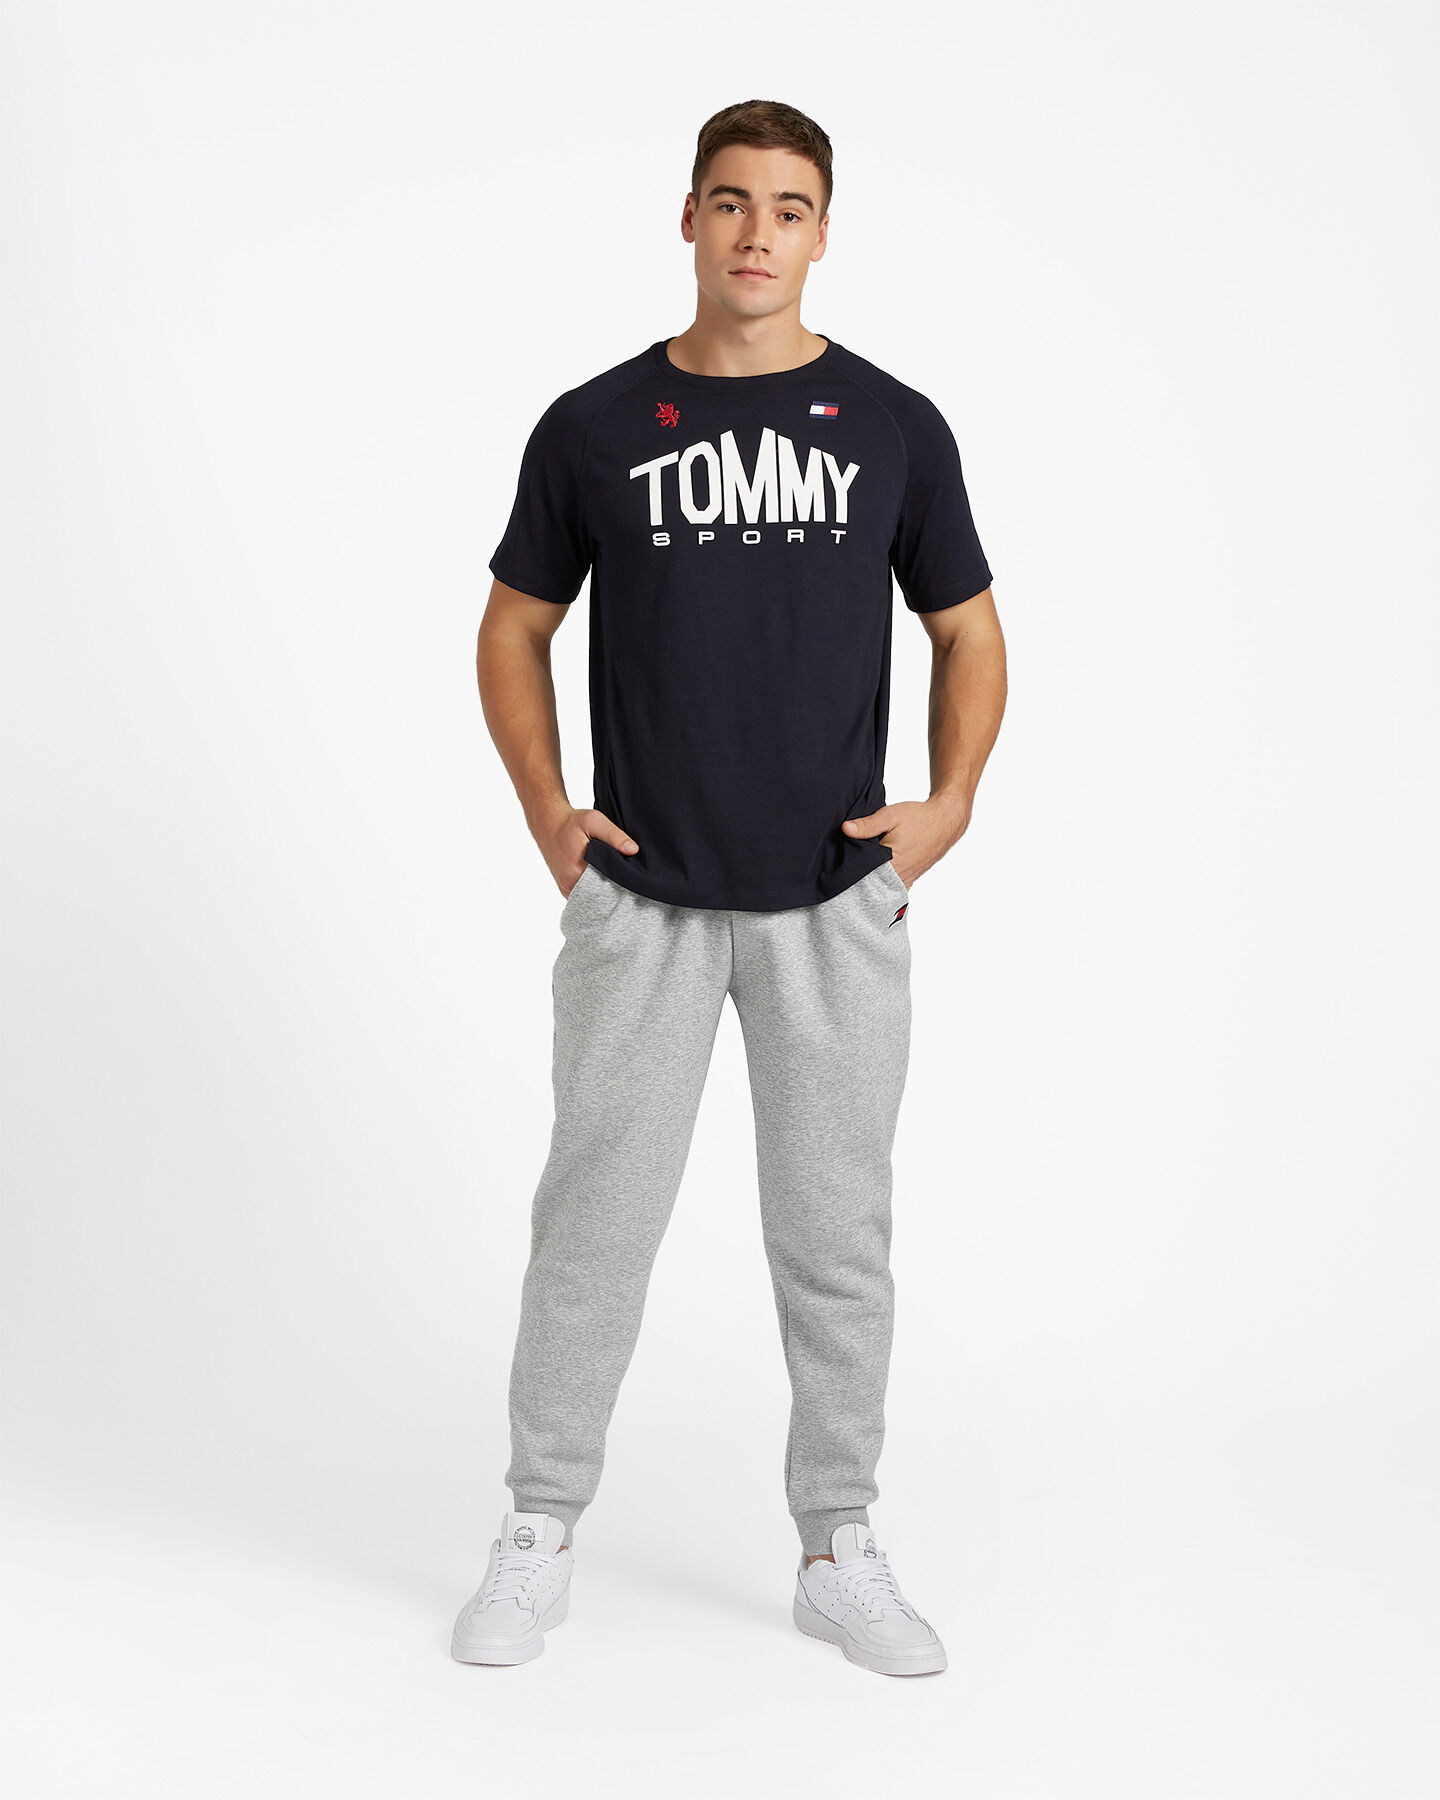  T-Shirt TOMMY HILFIGER ICON BIG LOGO M S4082457|DW5|SM scatto 1